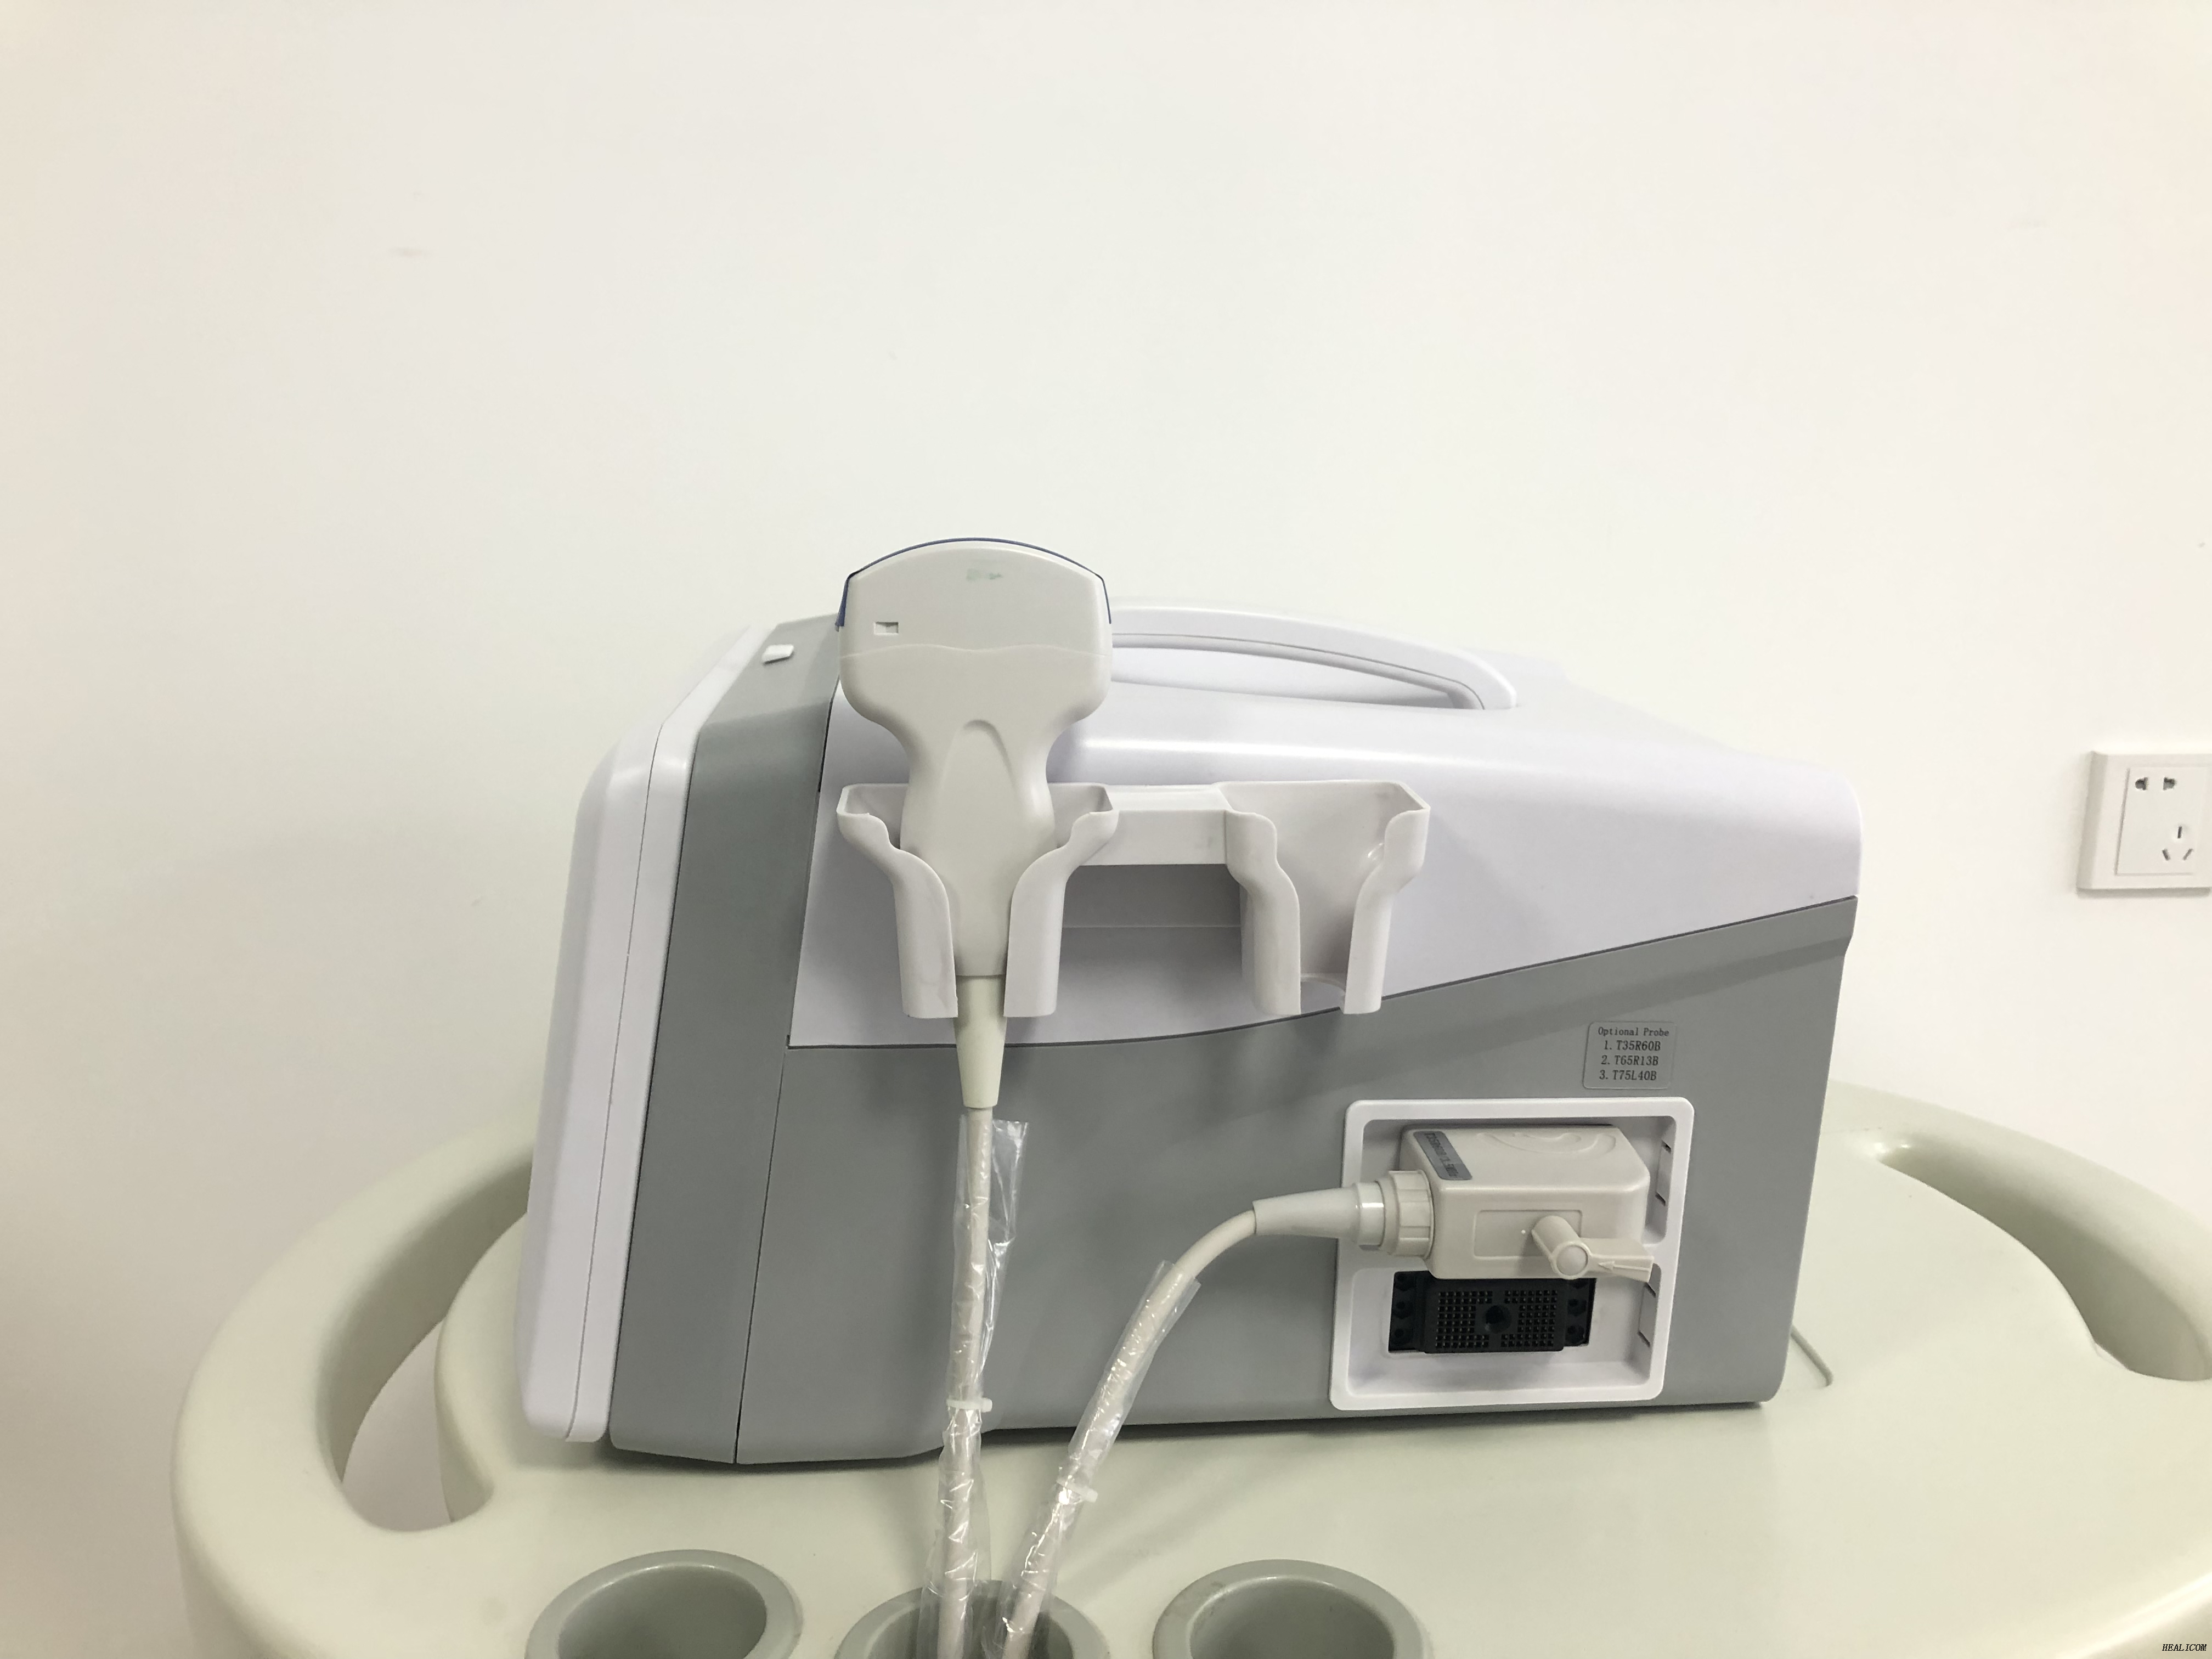 Medical Equipment HBW-2 ultrasonic portable mode ultrasound scanner